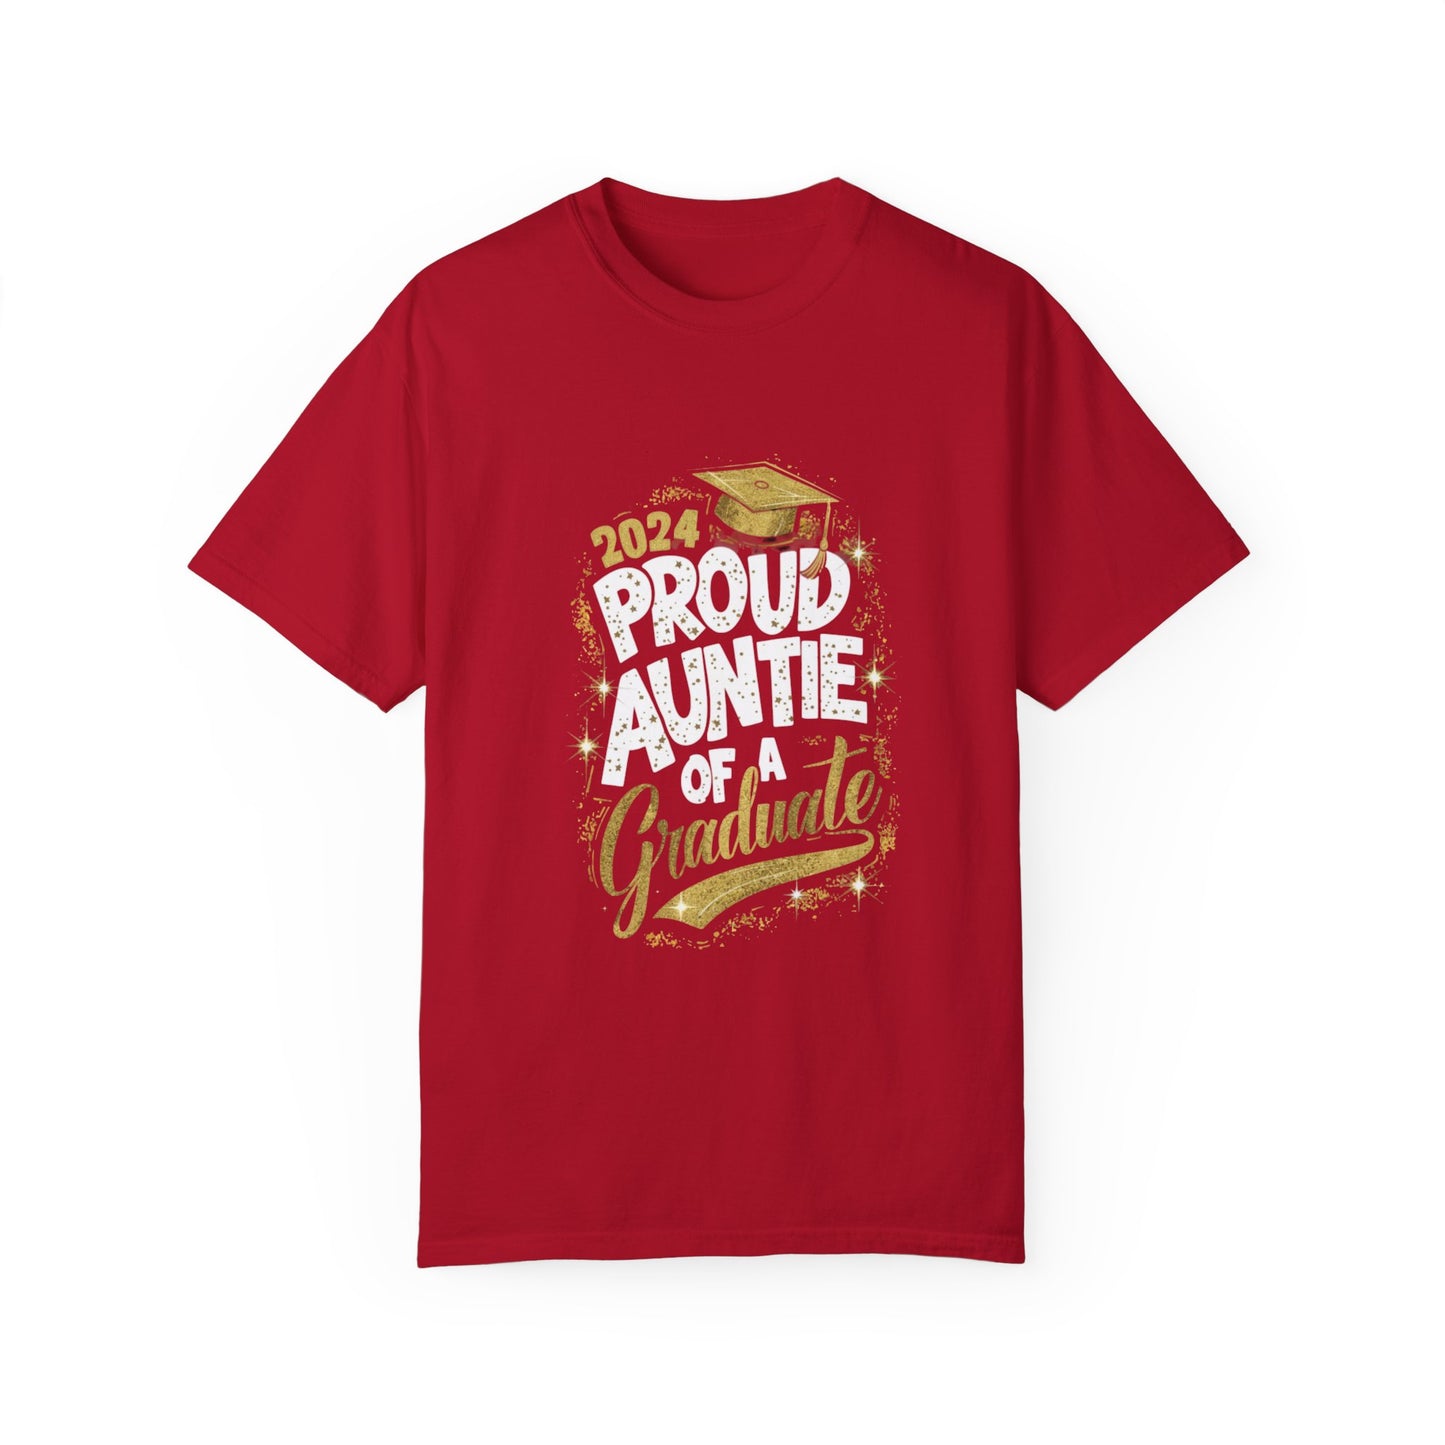 Proud Auntie of a 2024 Graduate Unisex Garment-dyed T-shirt Cotton Funny Humorous Graphic Soft Premium Unisex Men Women Red T-shirt Birthday Gift-2